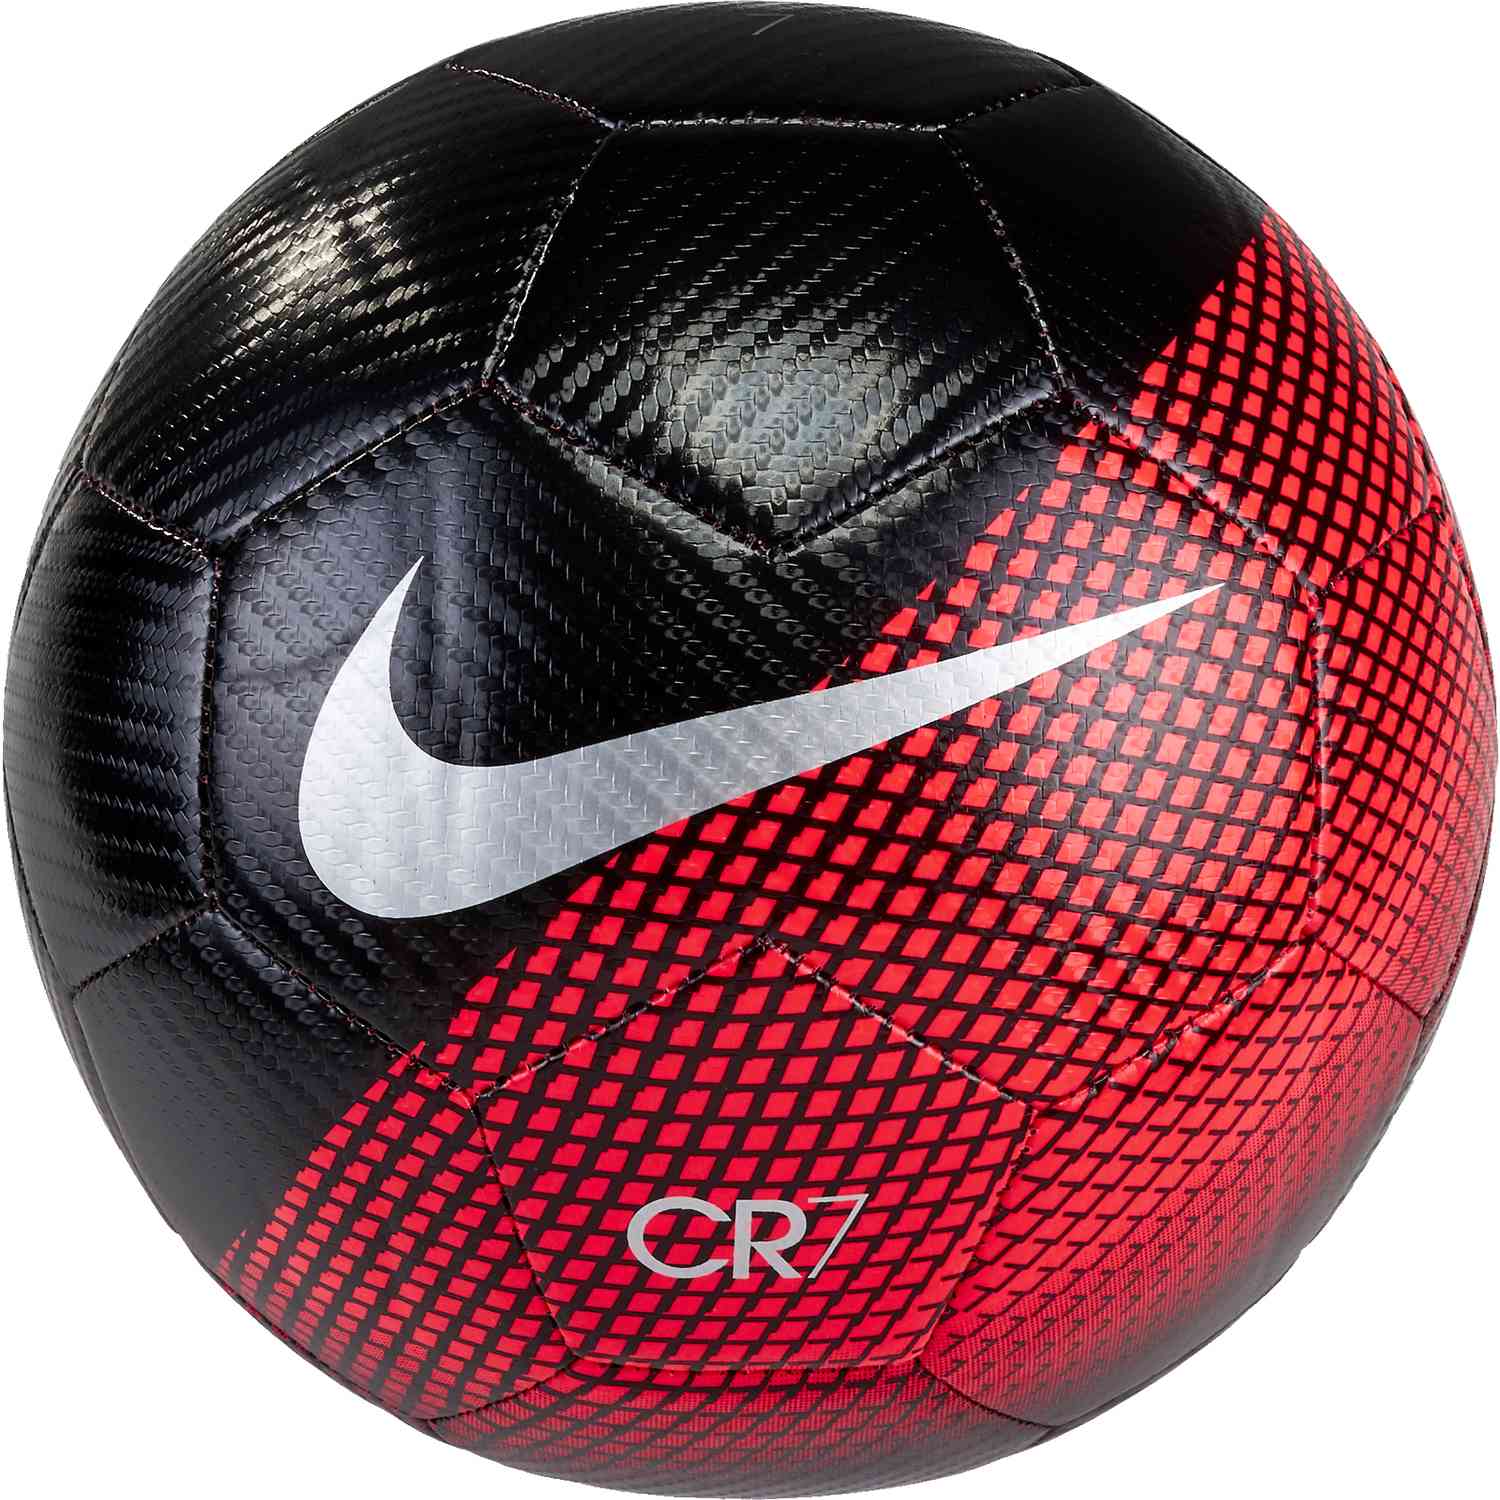 Nike CR7 Prestige Soccer Ball - Black/Flash Crimson/Silver - Soccer Master